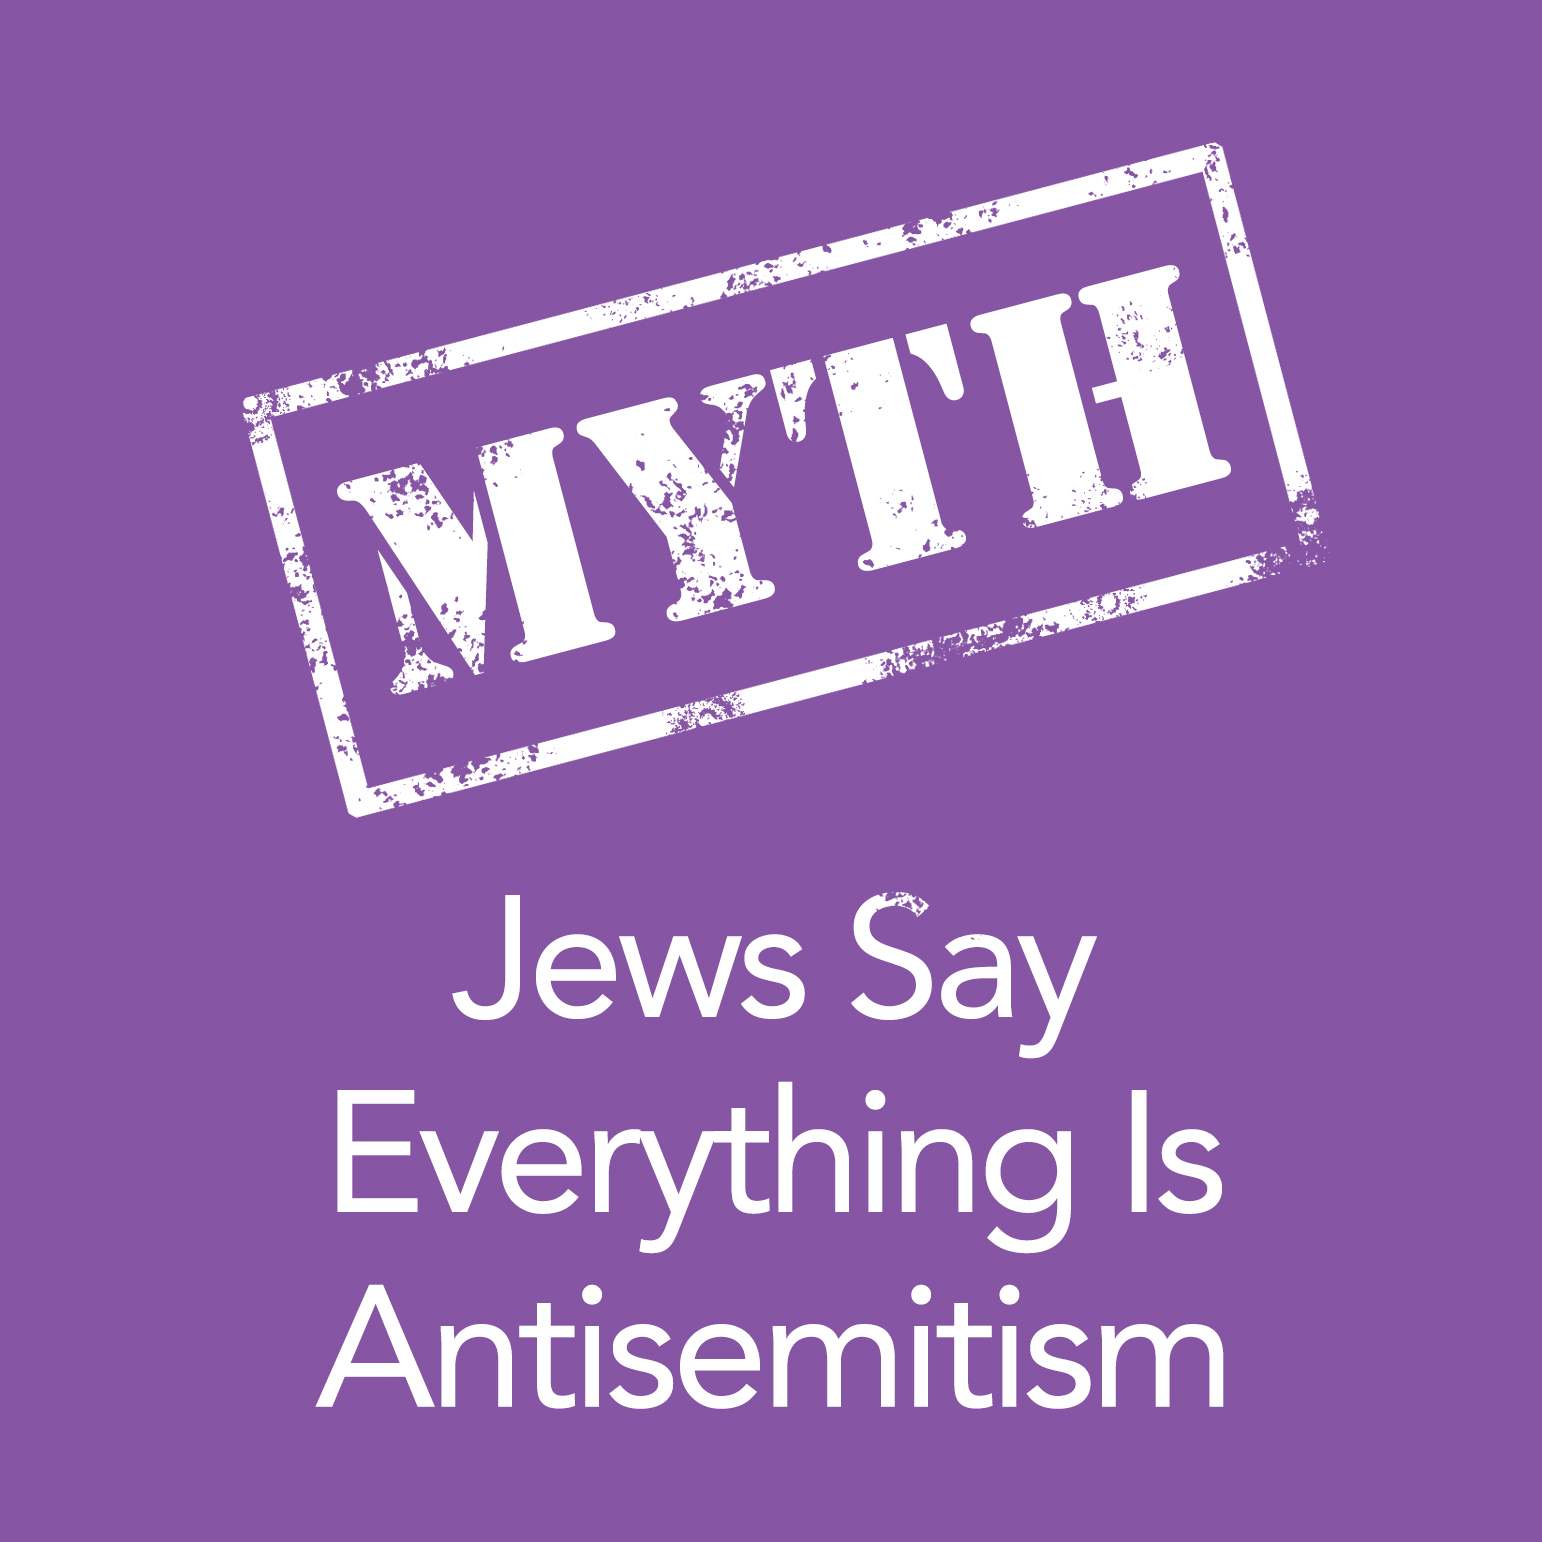 Jews Say Everything is Anti-Semitic